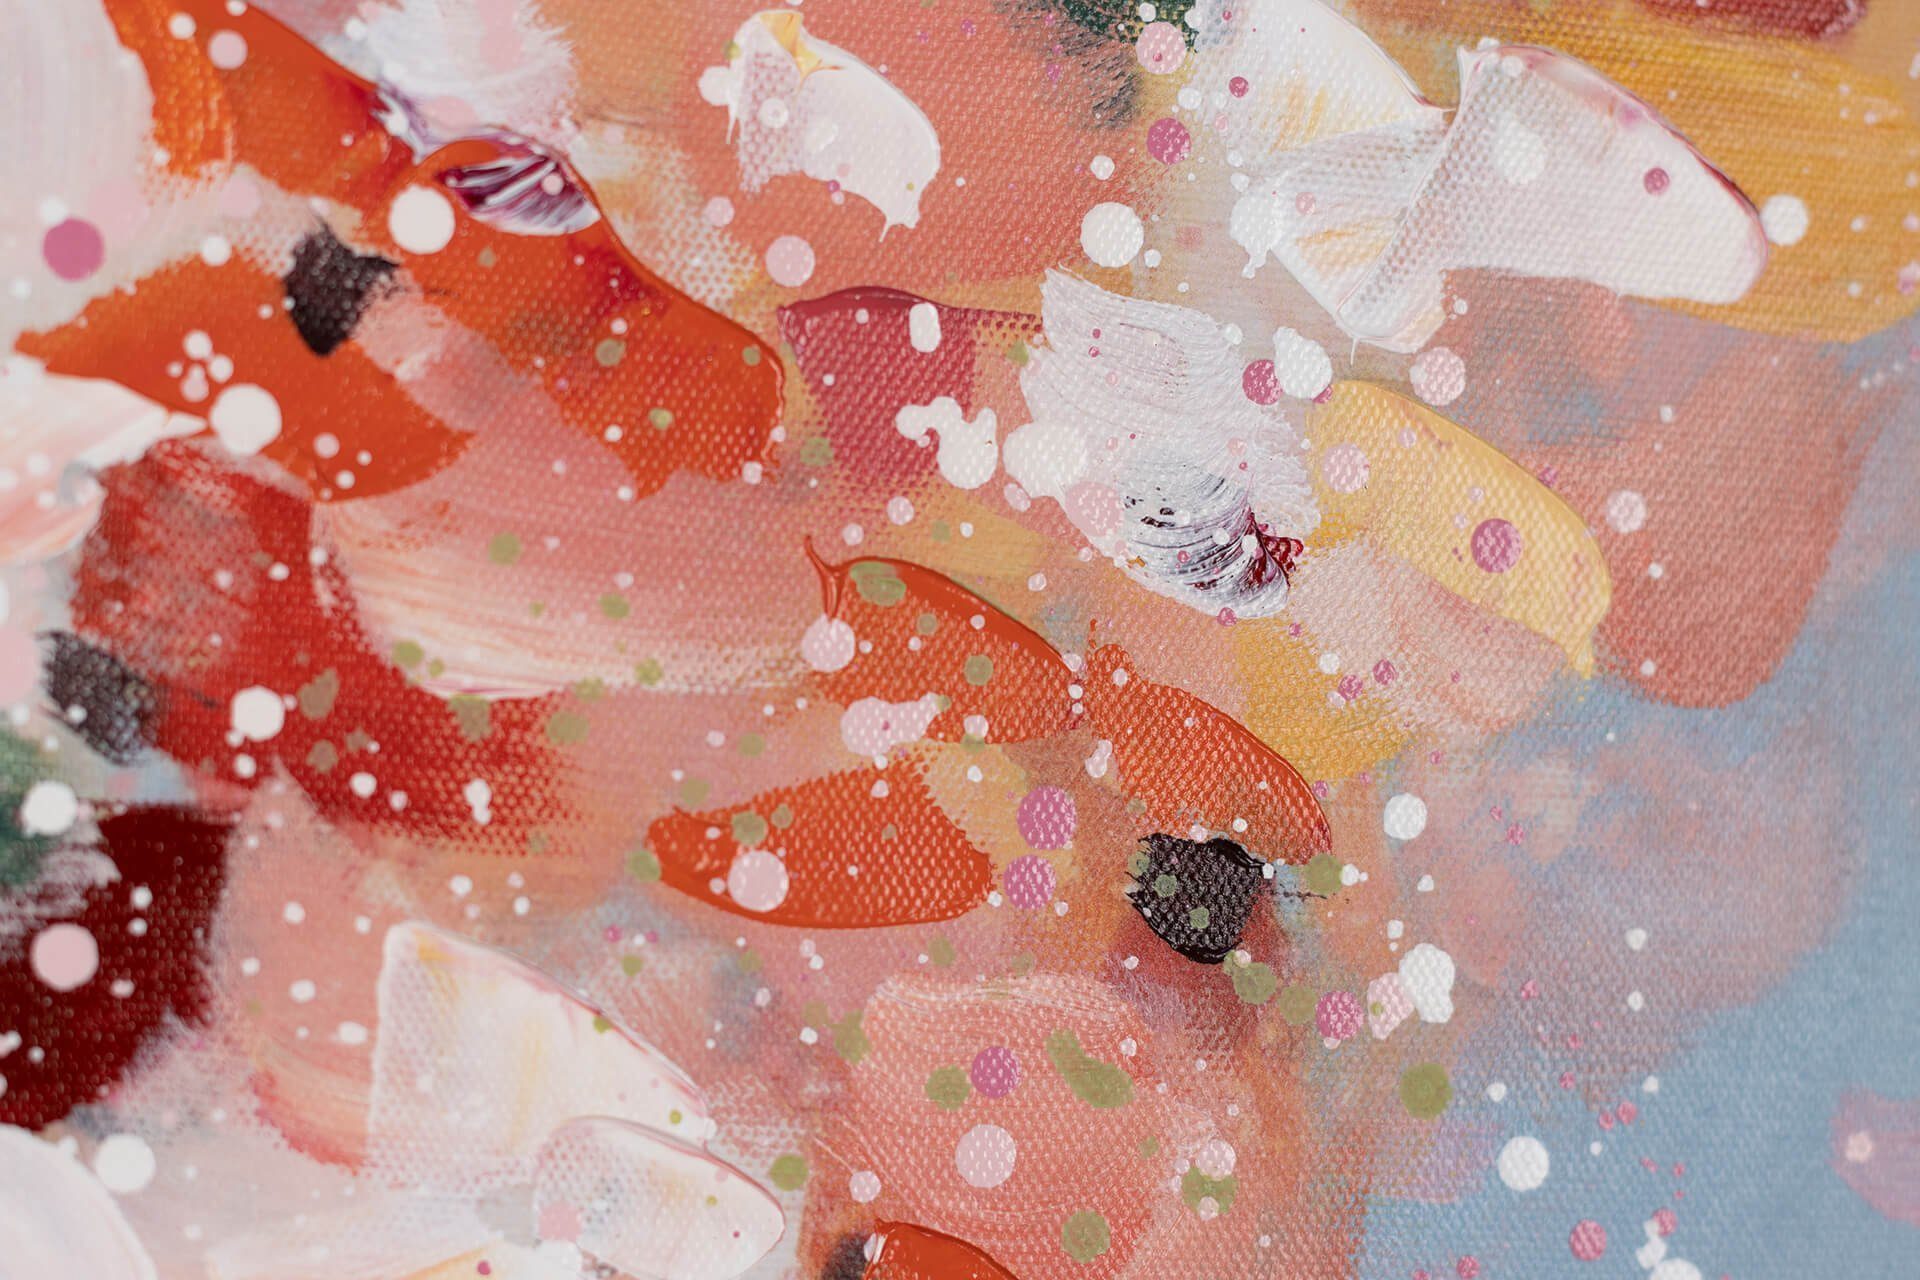 Soul Wohnzimmer HANDGEMALT KUNSTLOFT Gemälde Leinwandbild Wandbild Blossom 100% 60x90 cm,